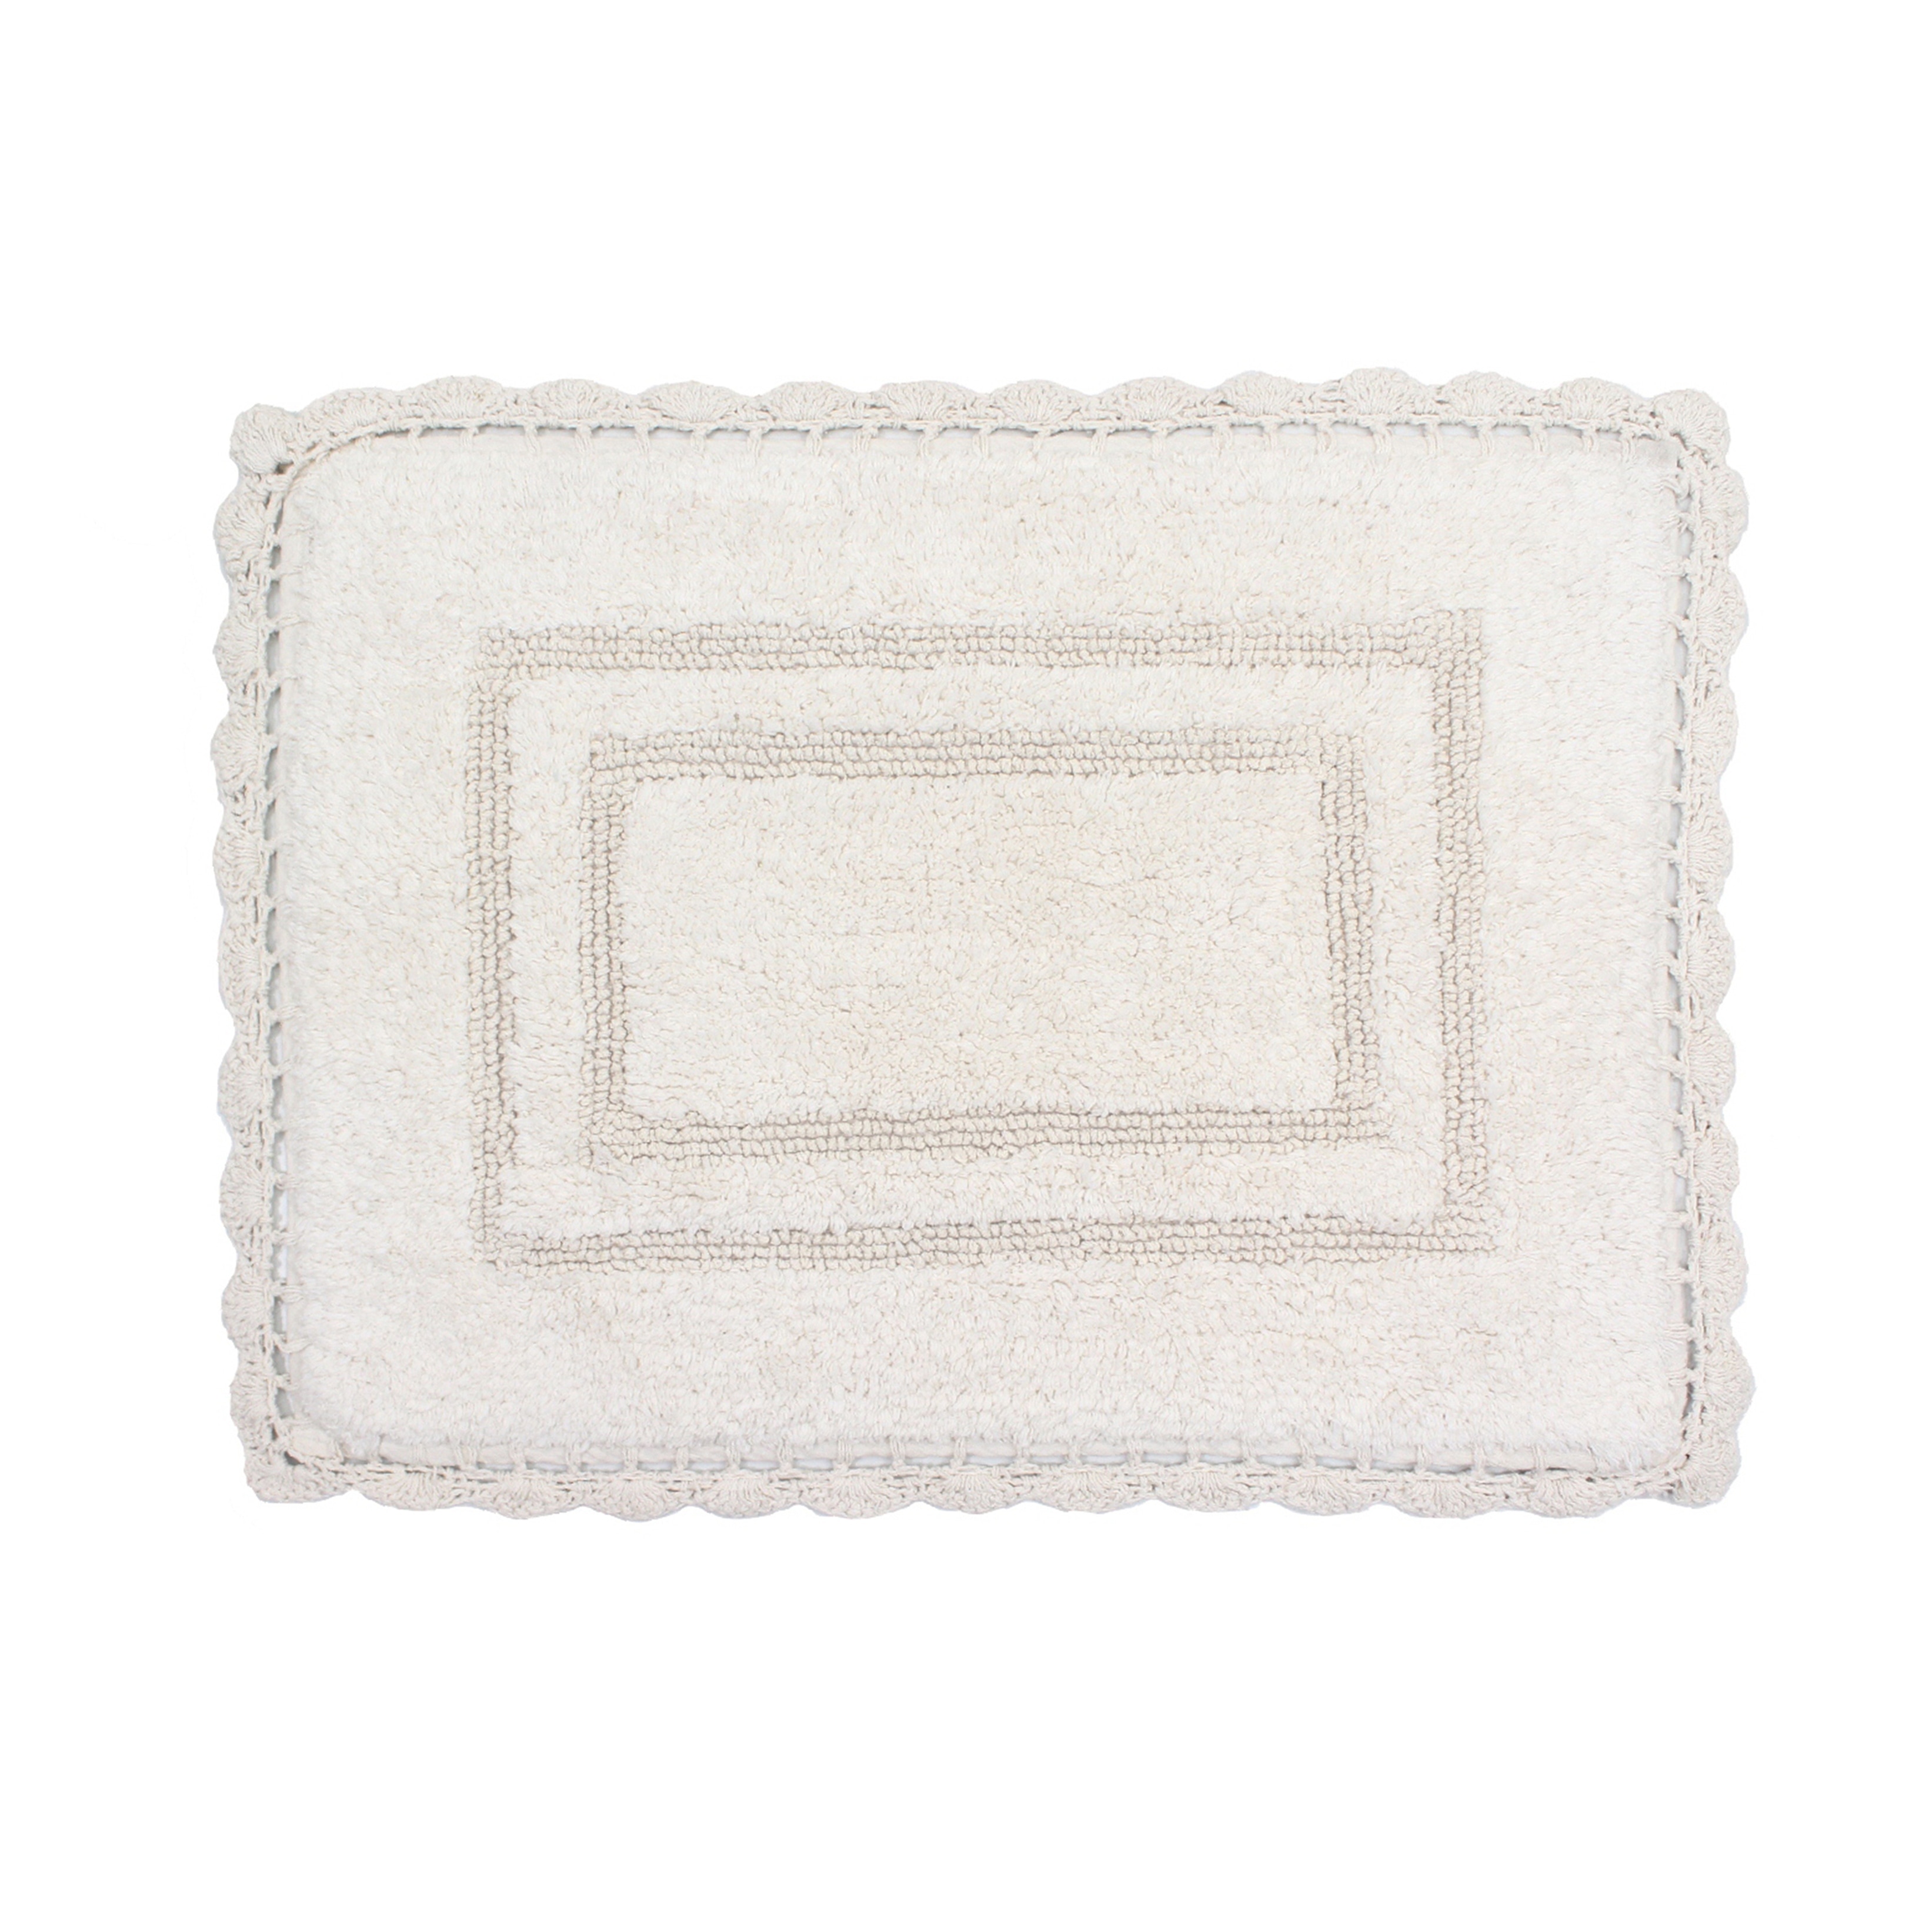 Reversible Cotton Bath Rug, Absorbent Mat